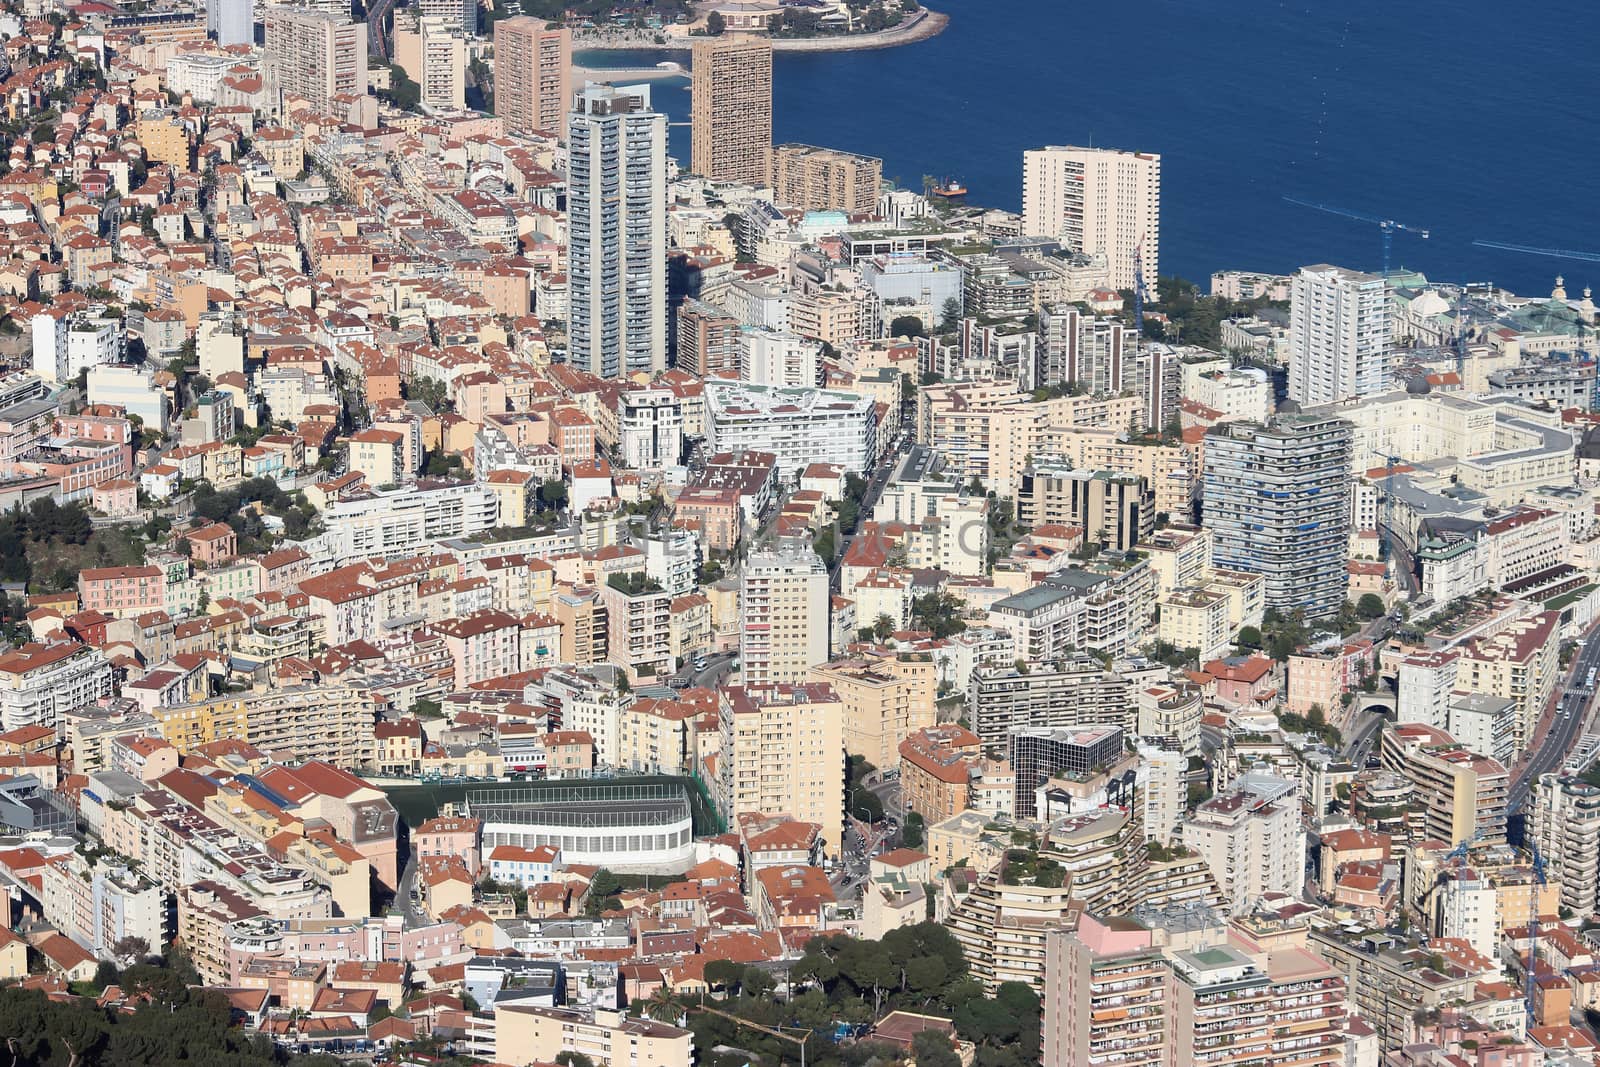 Aerial view of the Principality of Monaco - Monte-Carlo, Beausoleil, Le Larvotto
